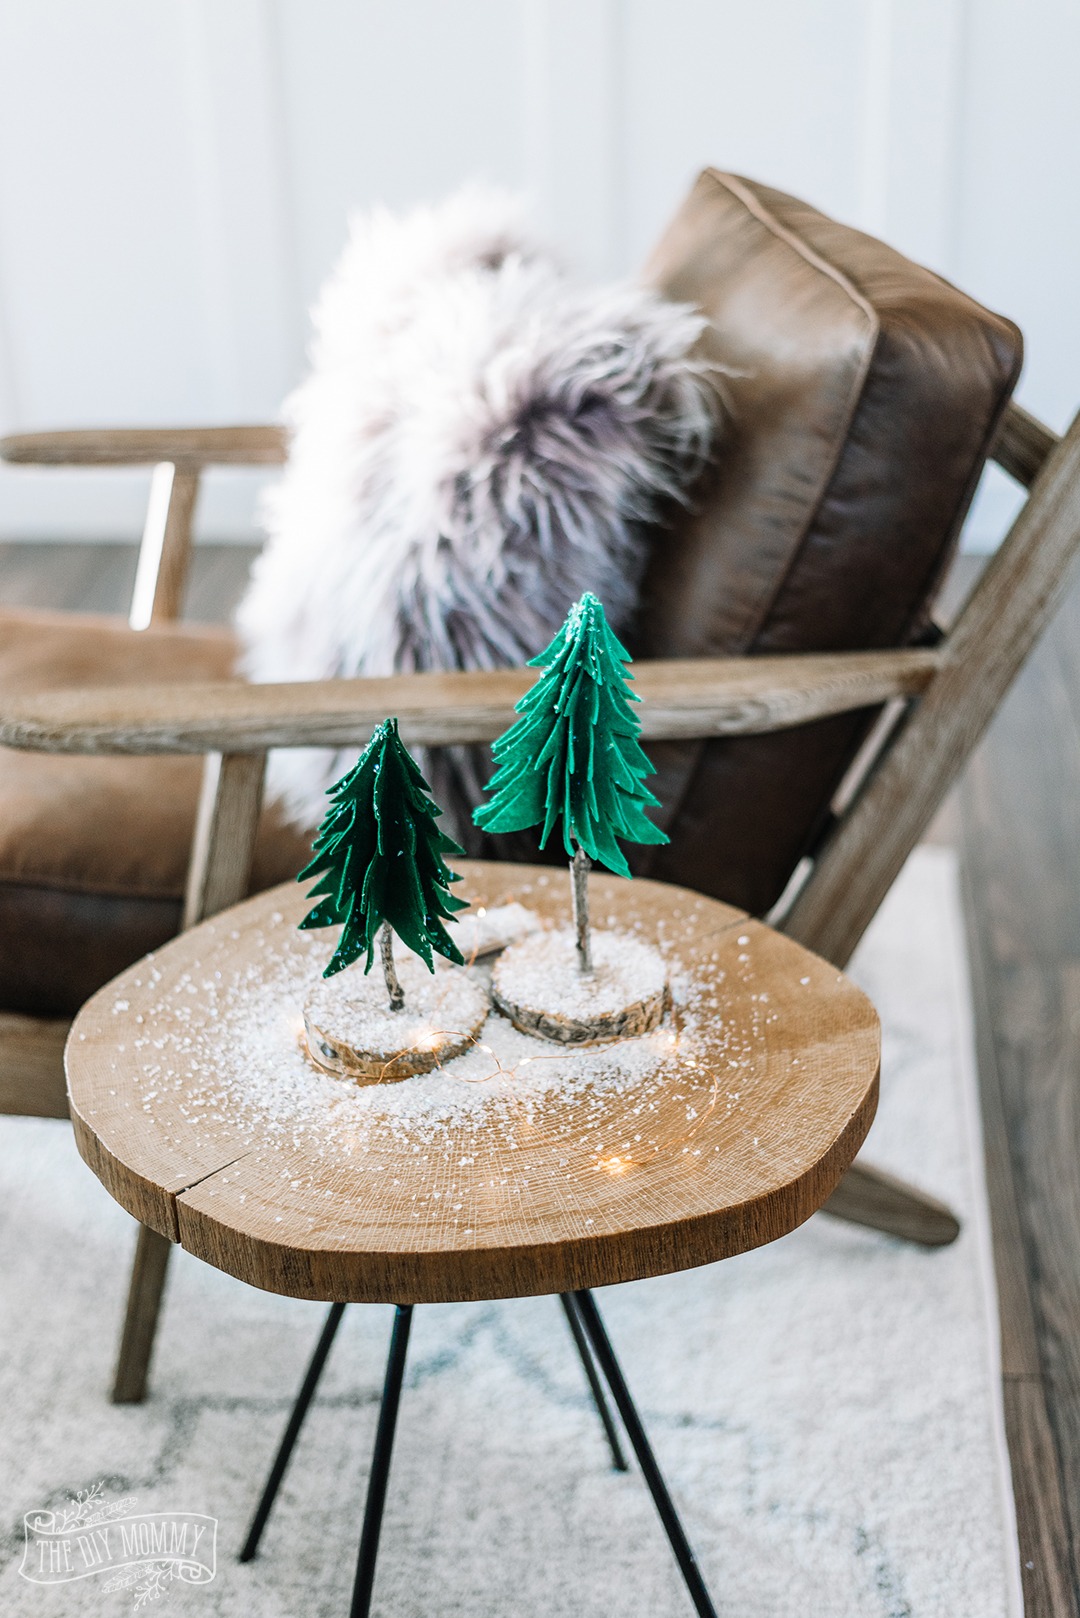 Make Rustic Felt & Wood Trees for Winter & Christmas Decor